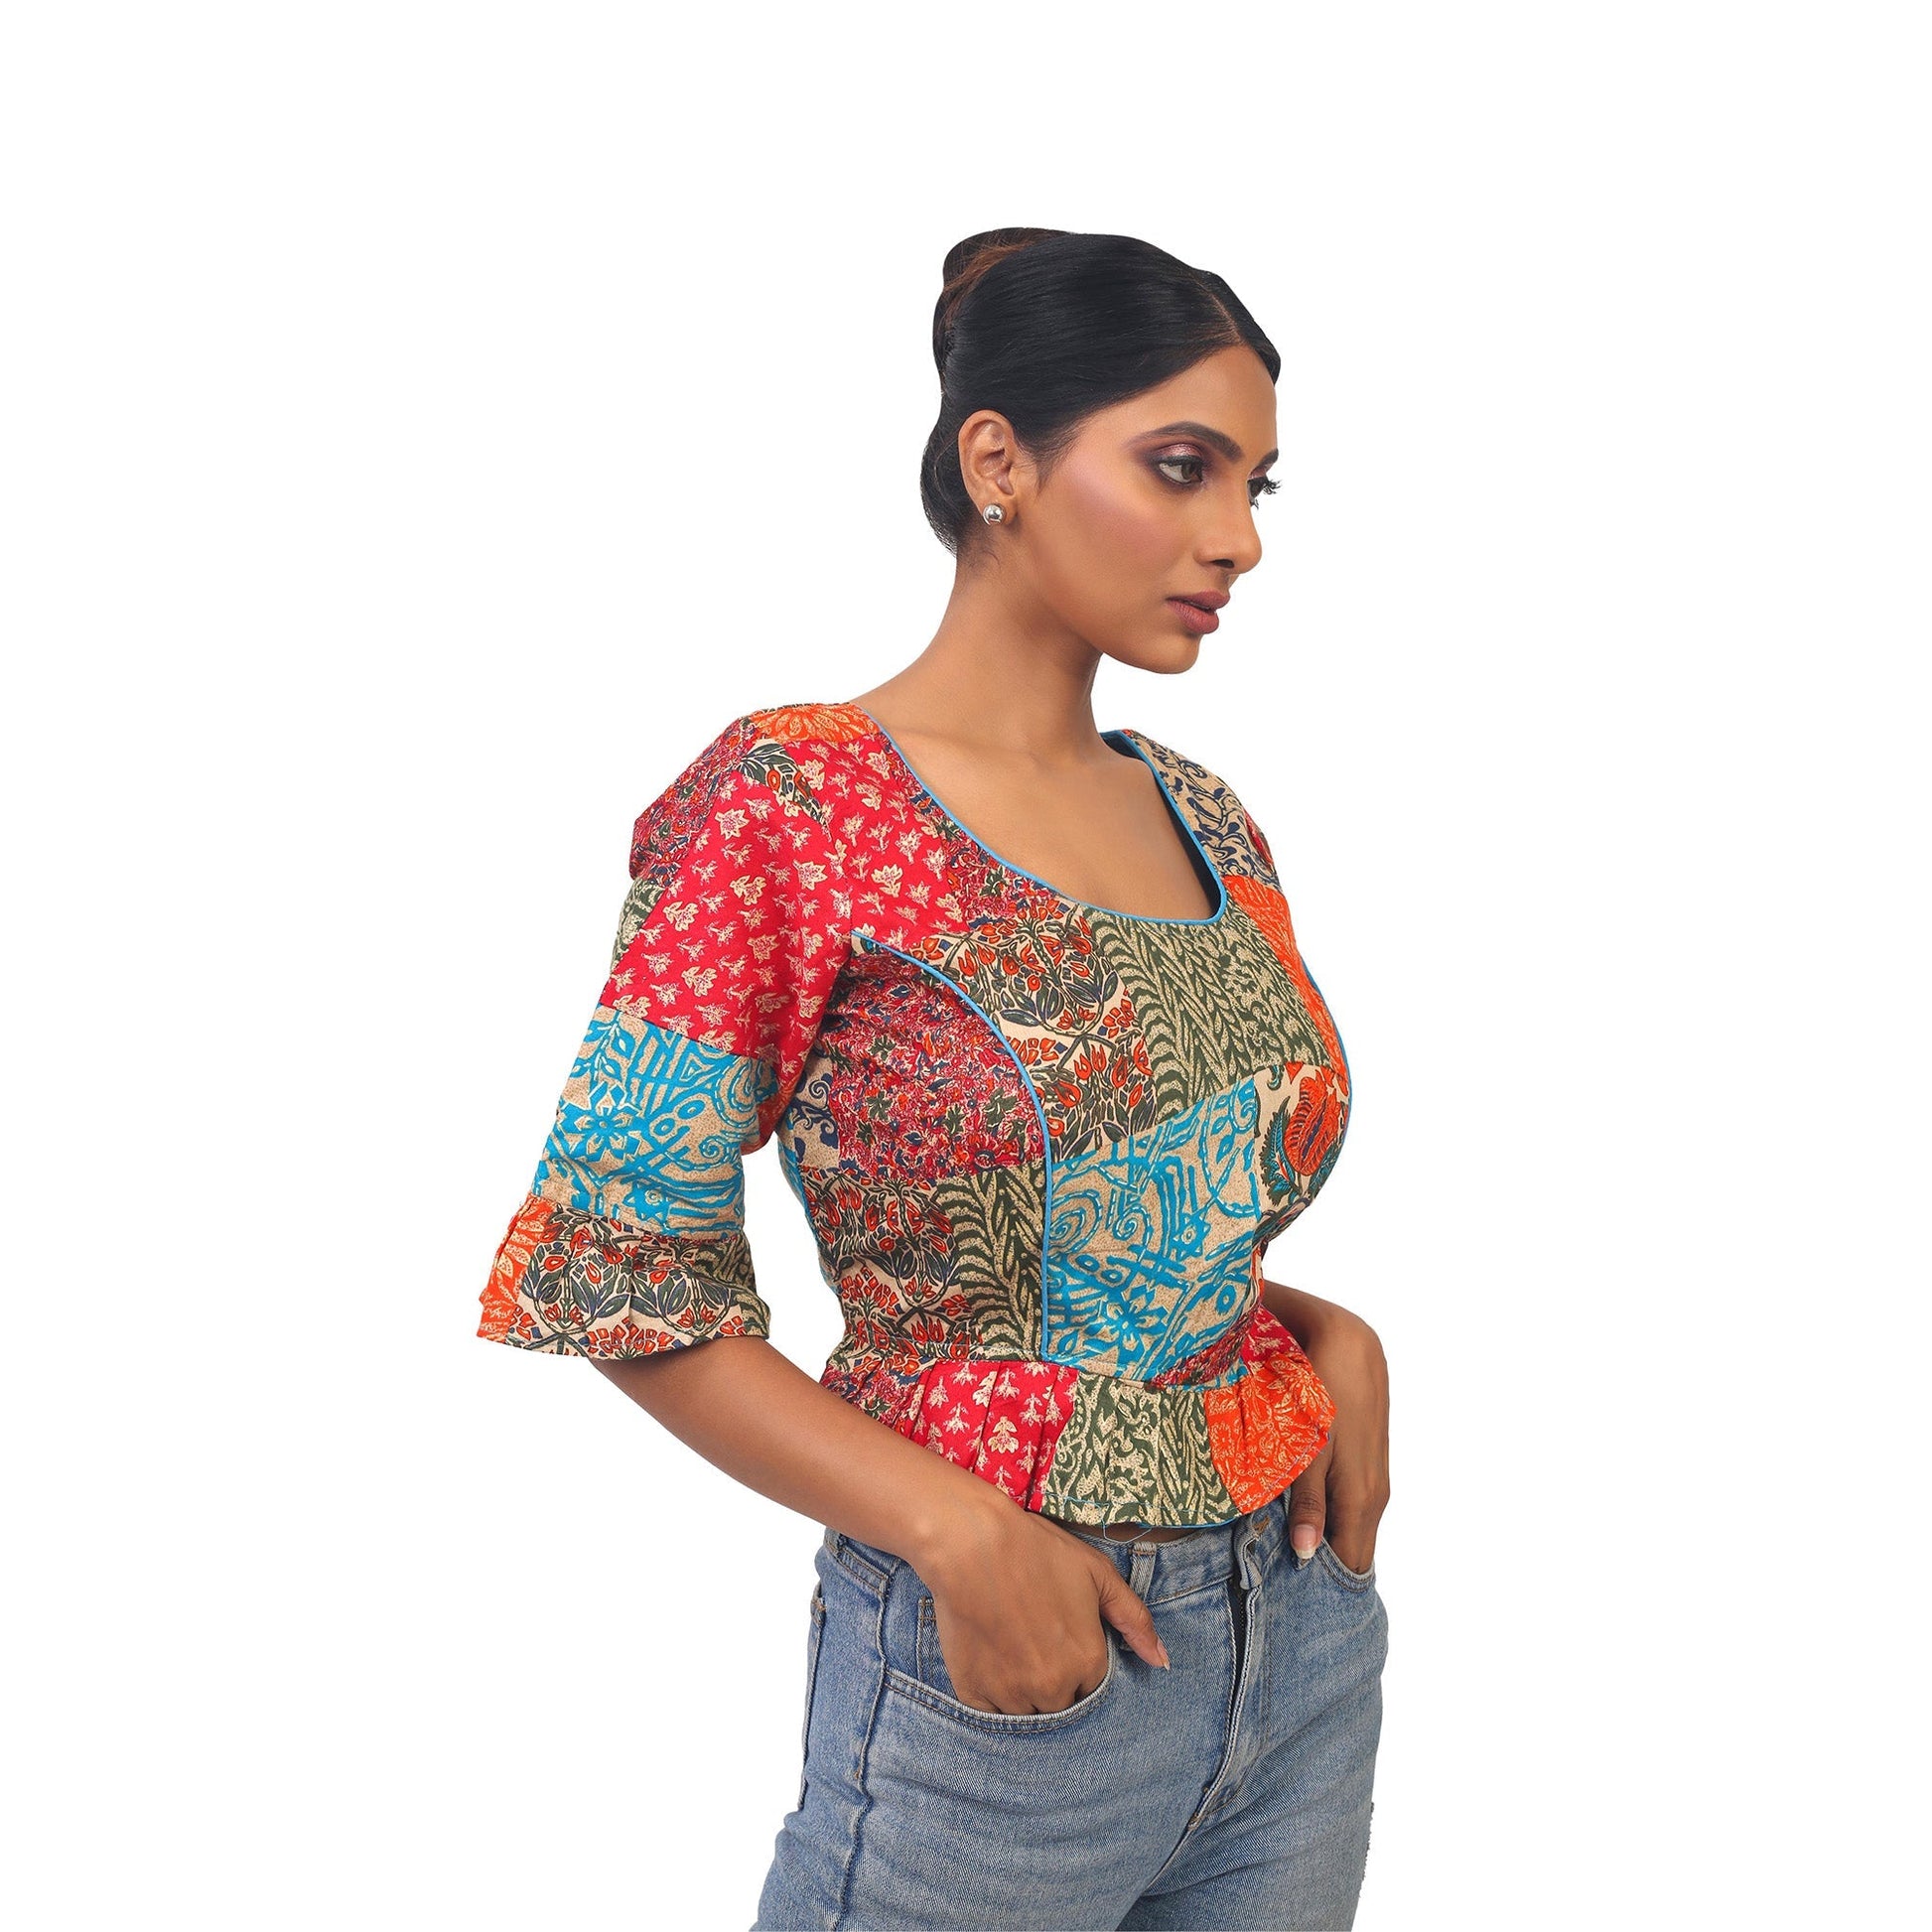 Digital print | Silk | Designer | Blouse 36 Apparel & Accessories 32 34 36 Blouse blouses Crop tops Digital thehangrdigital-print-silk-designer-blousethehangr-745772